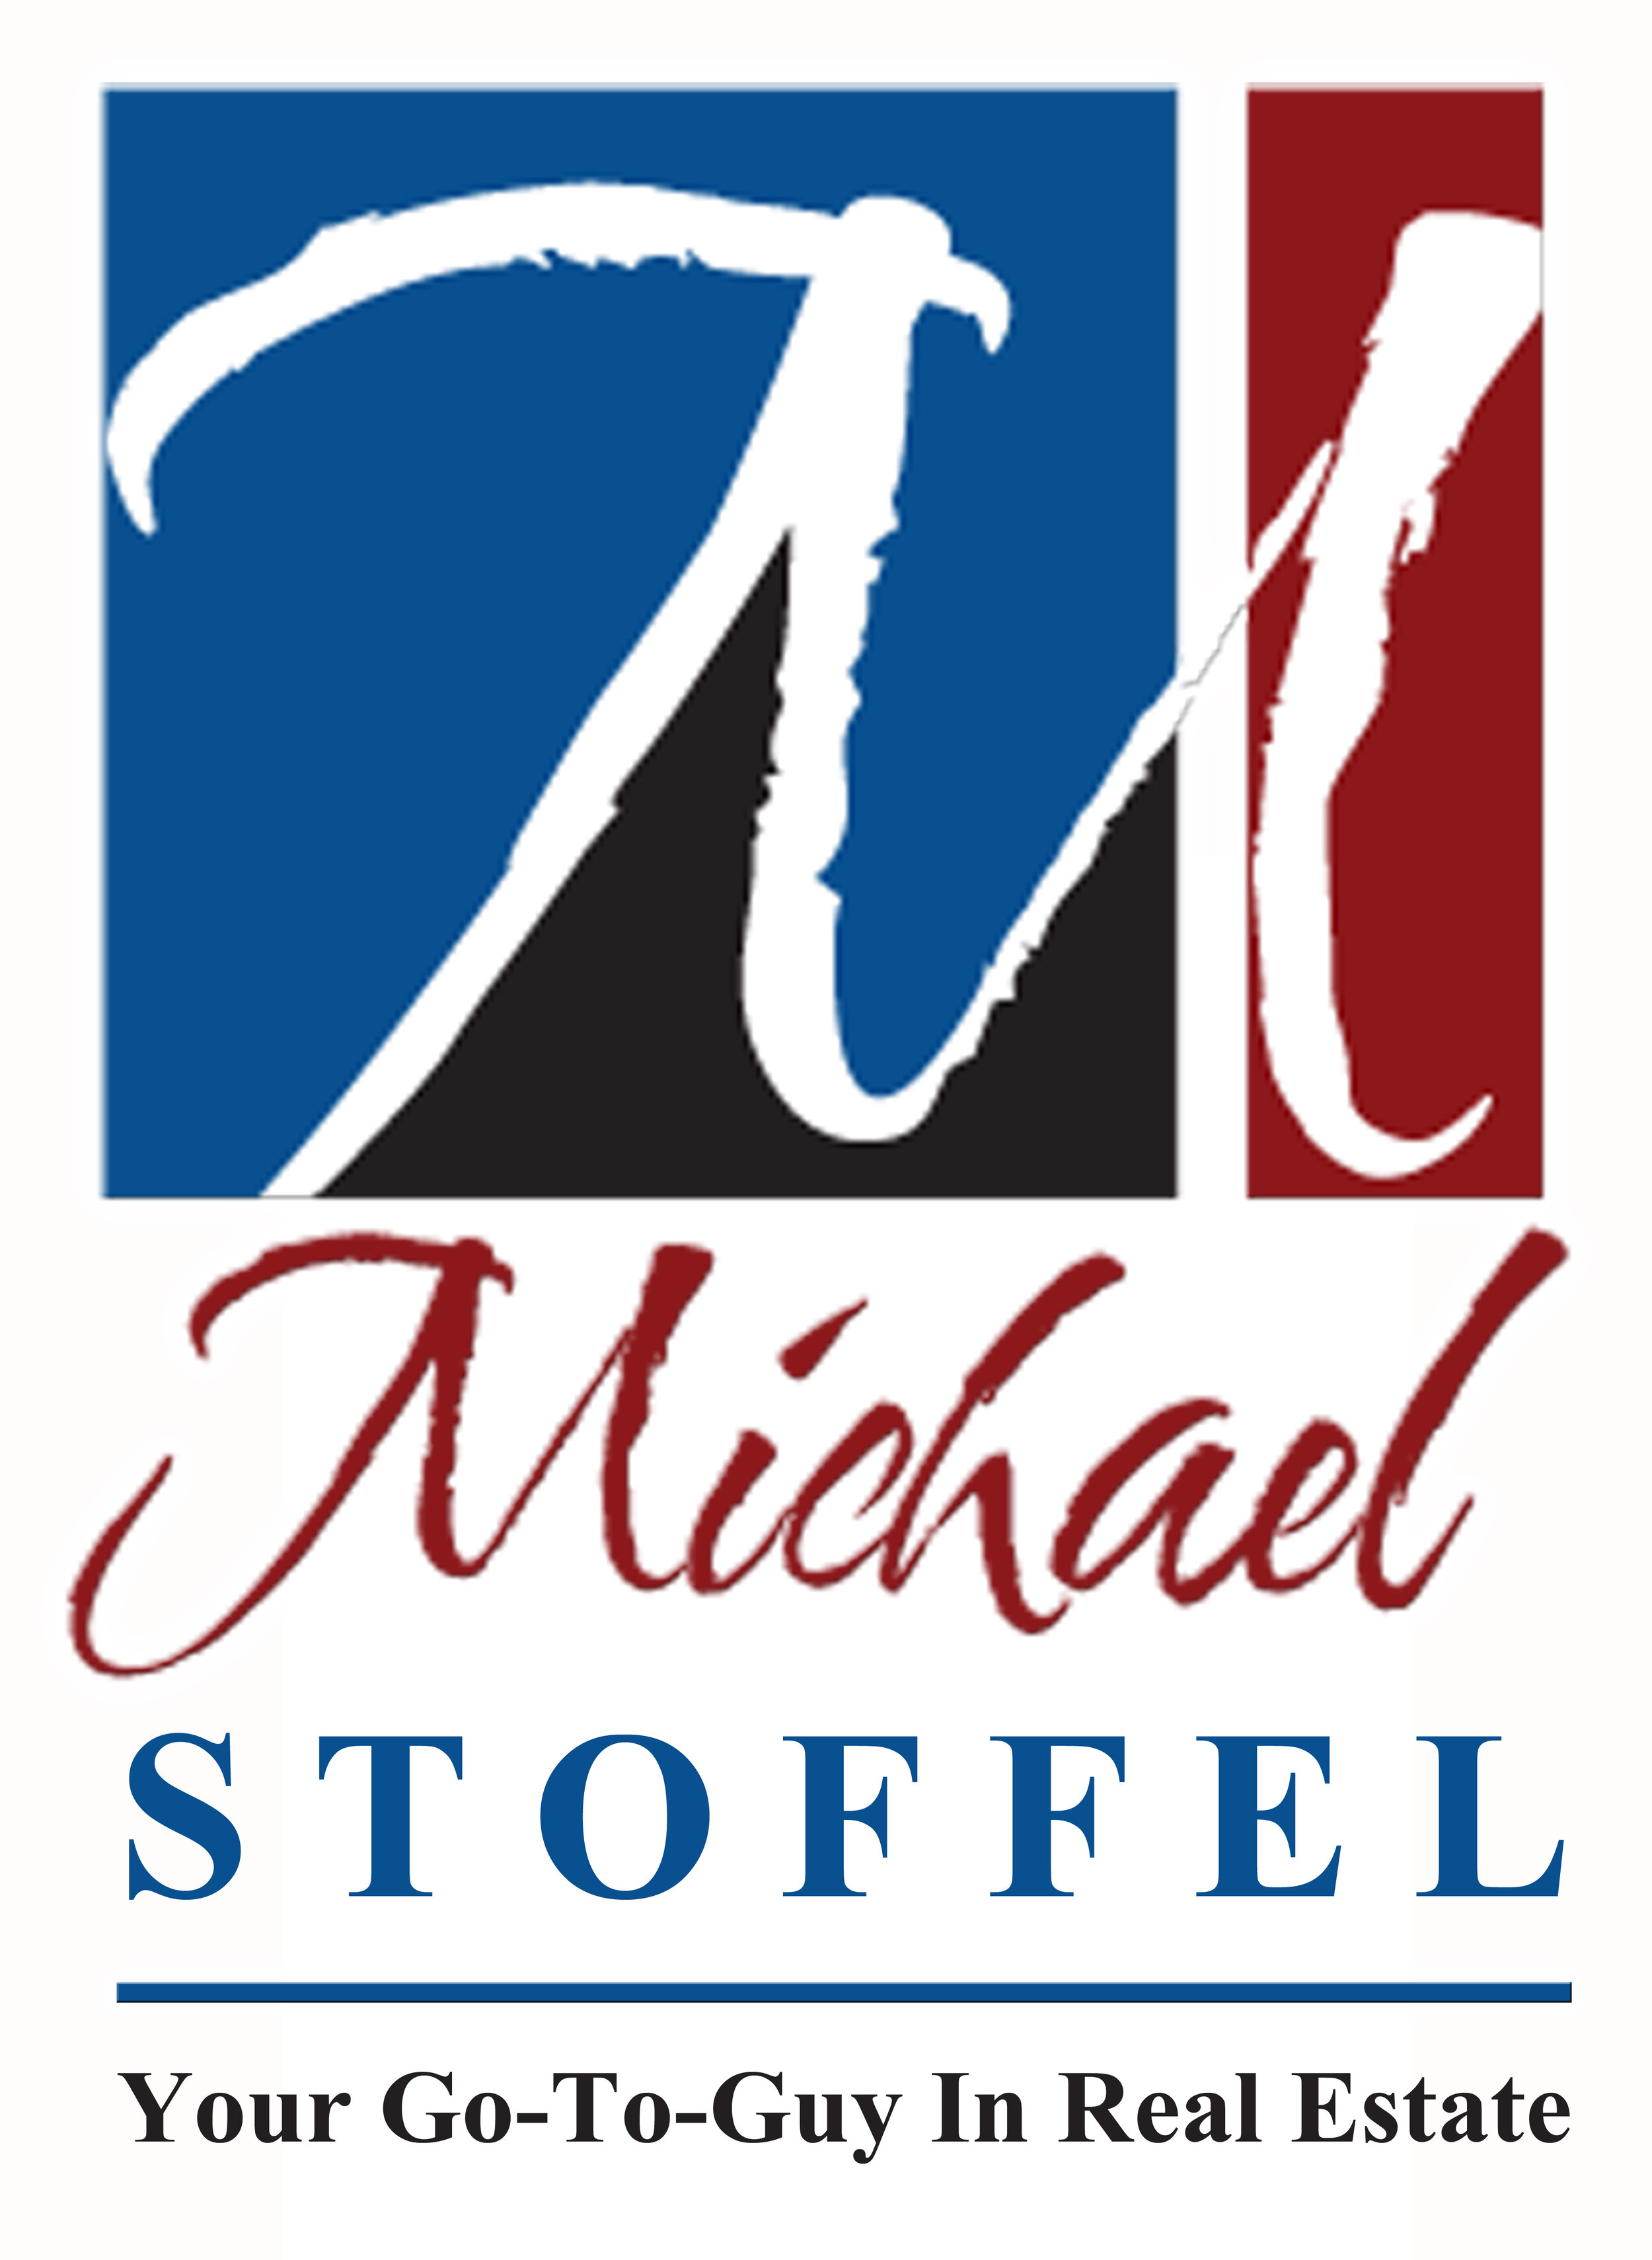 Stoffel logo.jpg